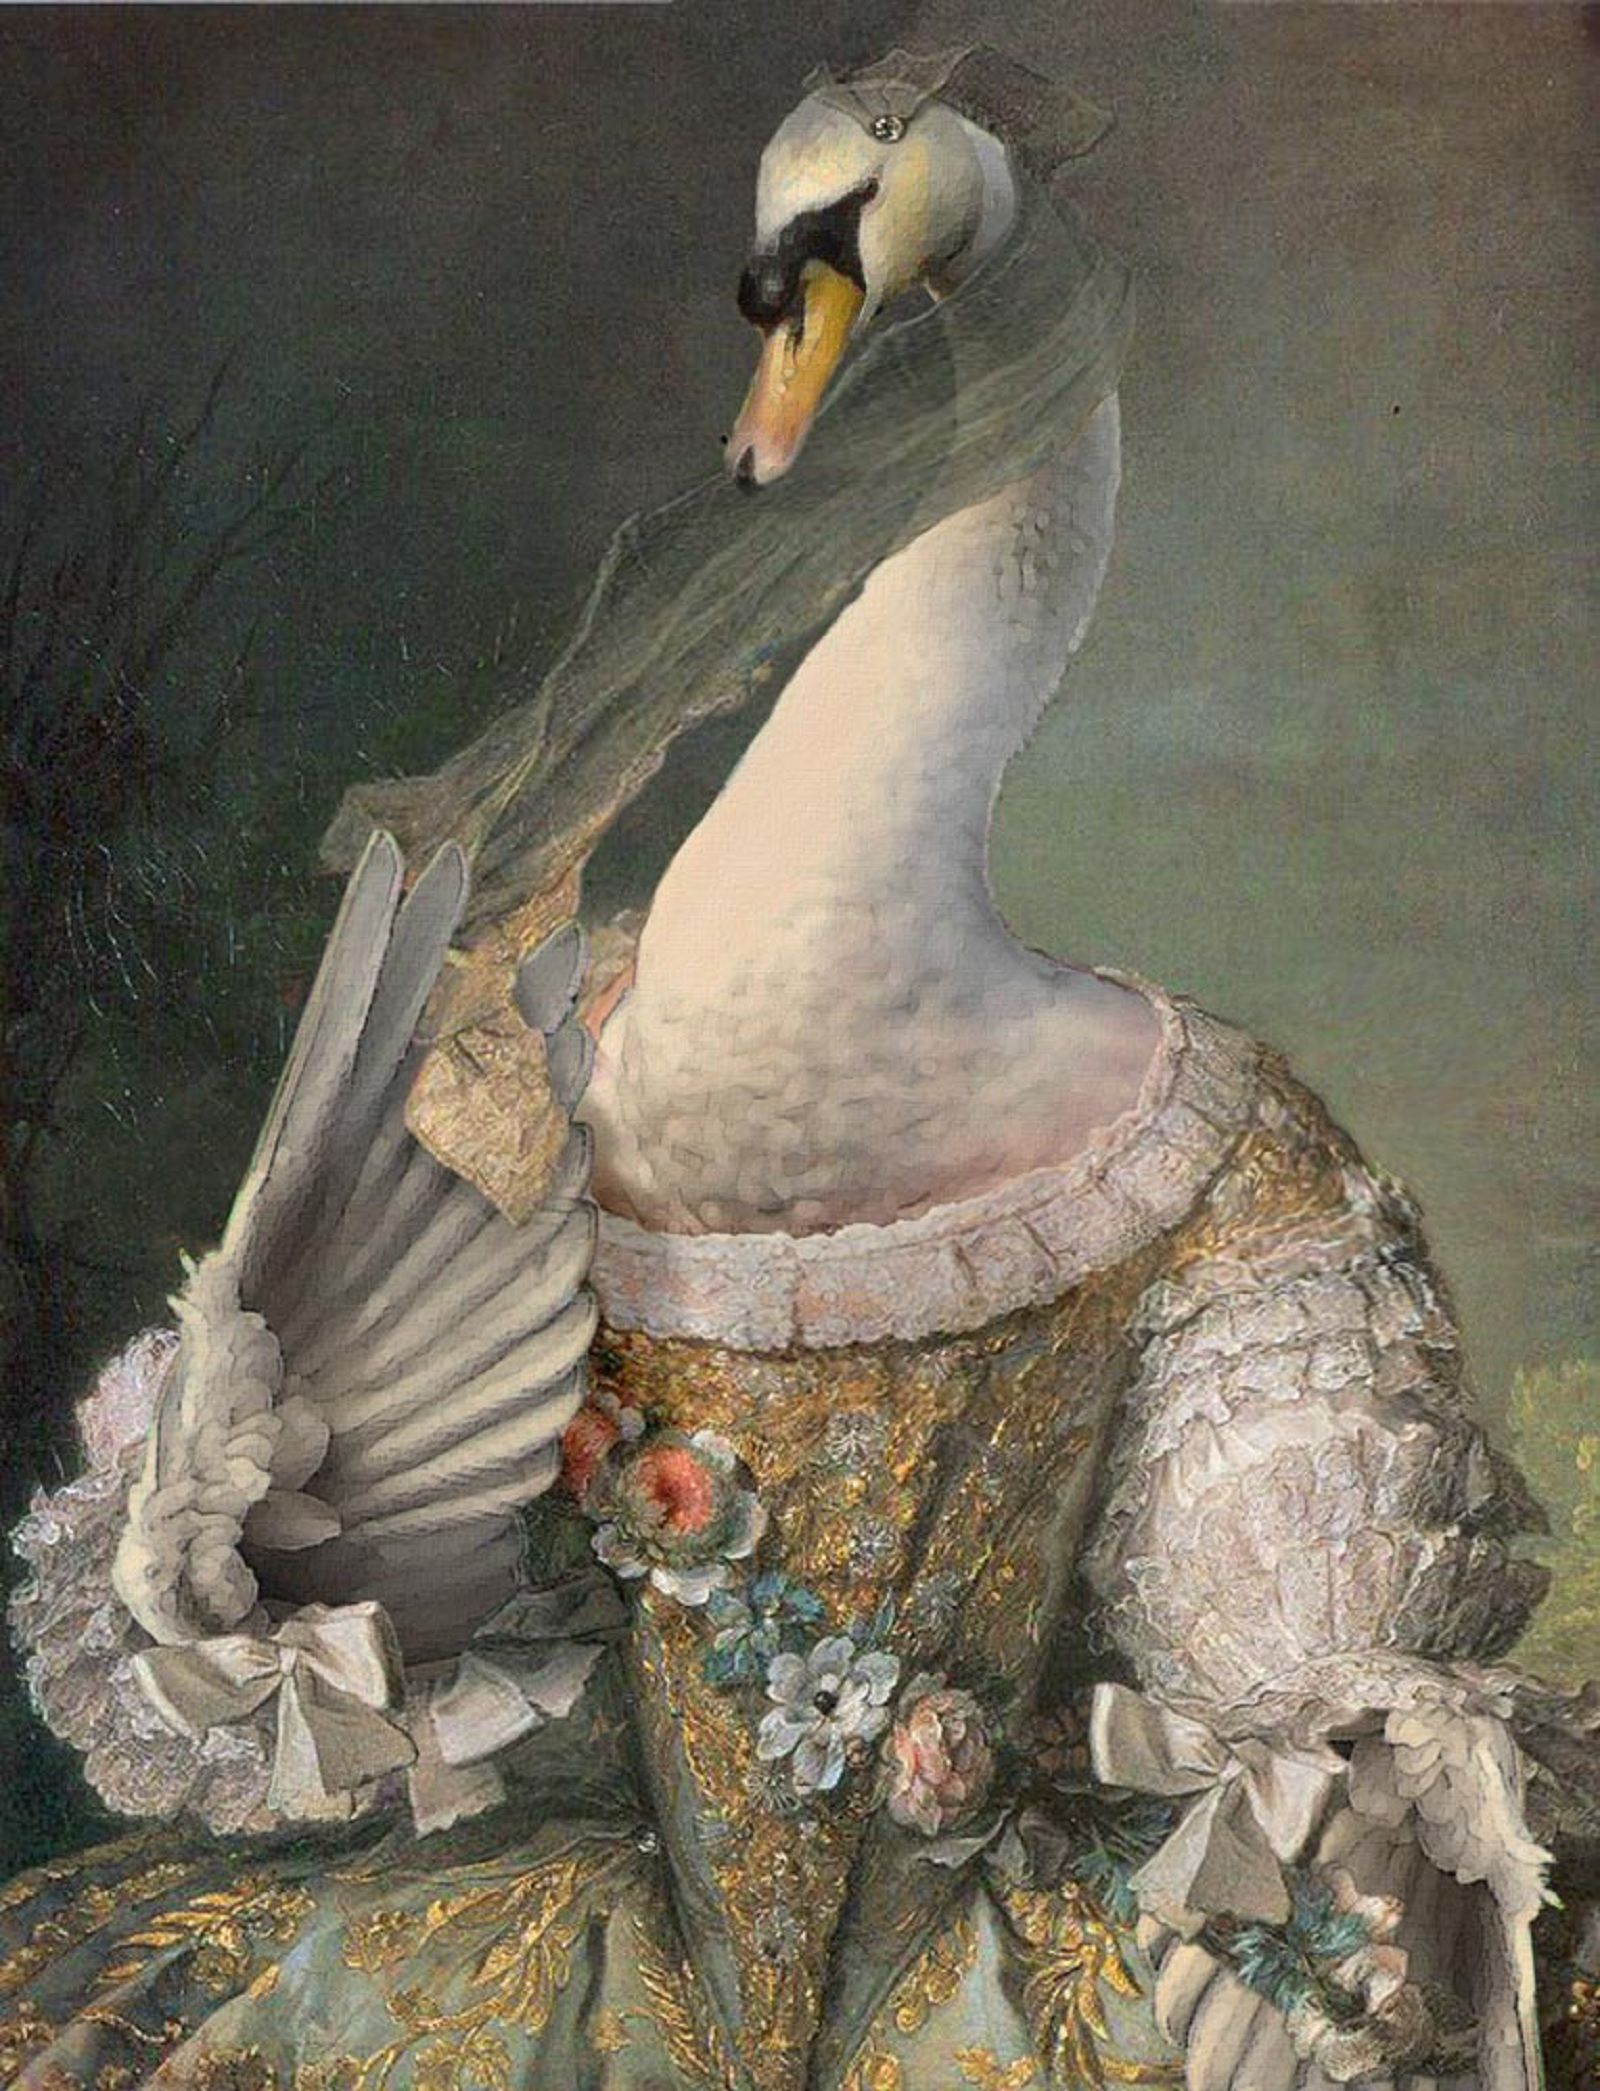 Amusing Images Of Animals Photoshopped Into Renaissance Paintings image 21